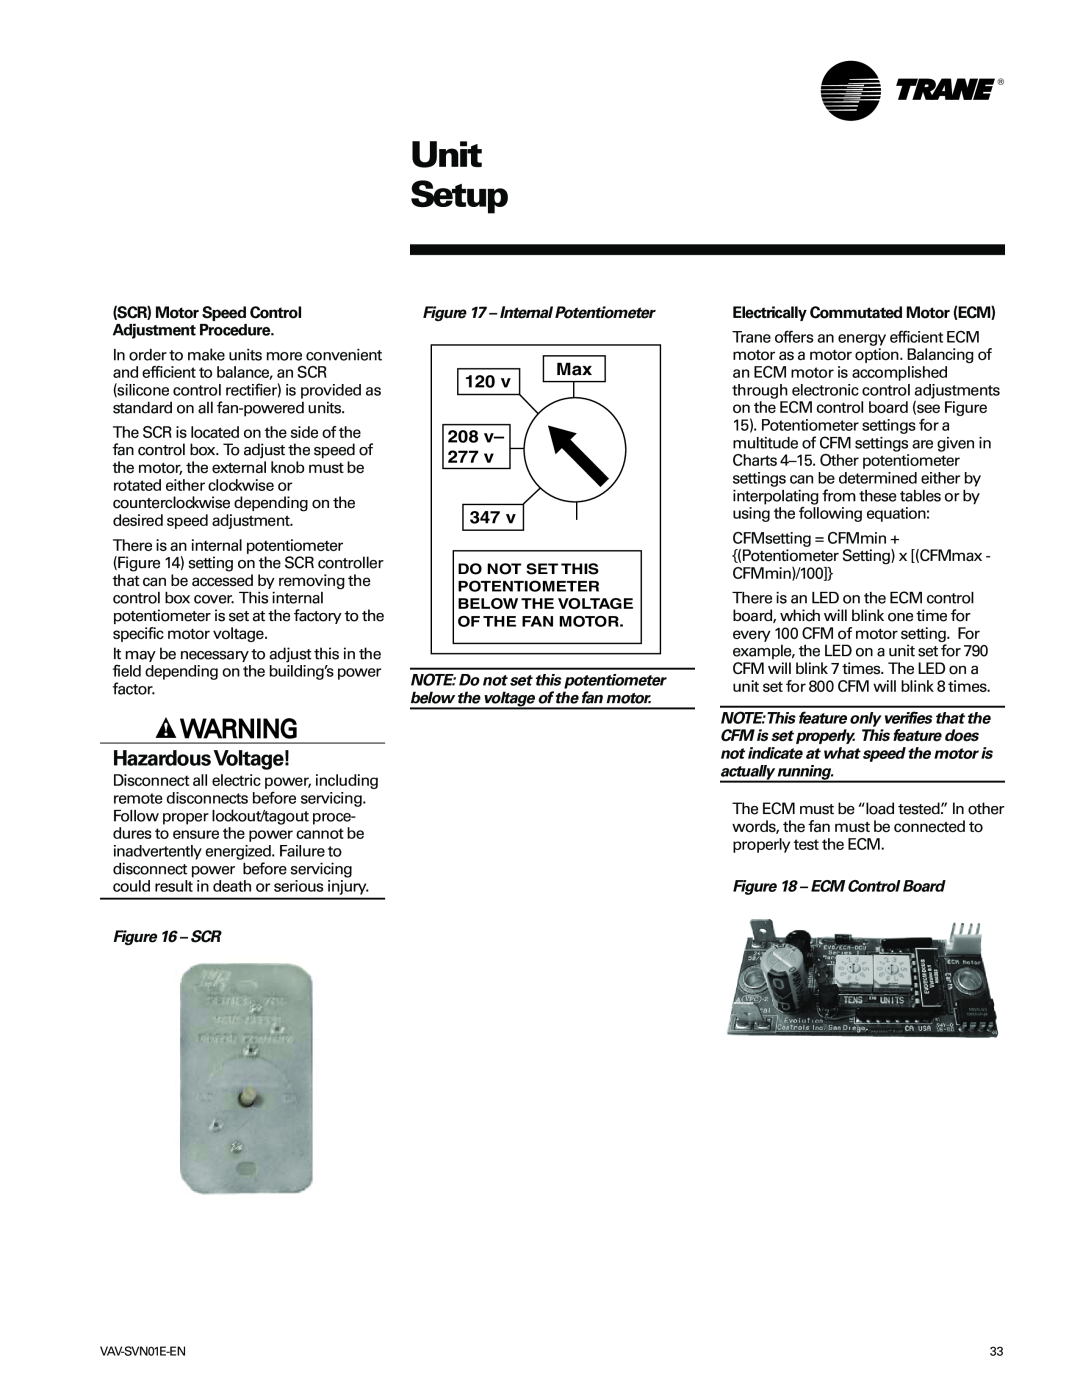 Trane Trane manual HazardousVoltage, Unit Setup, Max 120 208 v- 277, Scr, Internal Potentiometer, ECM Control Board 